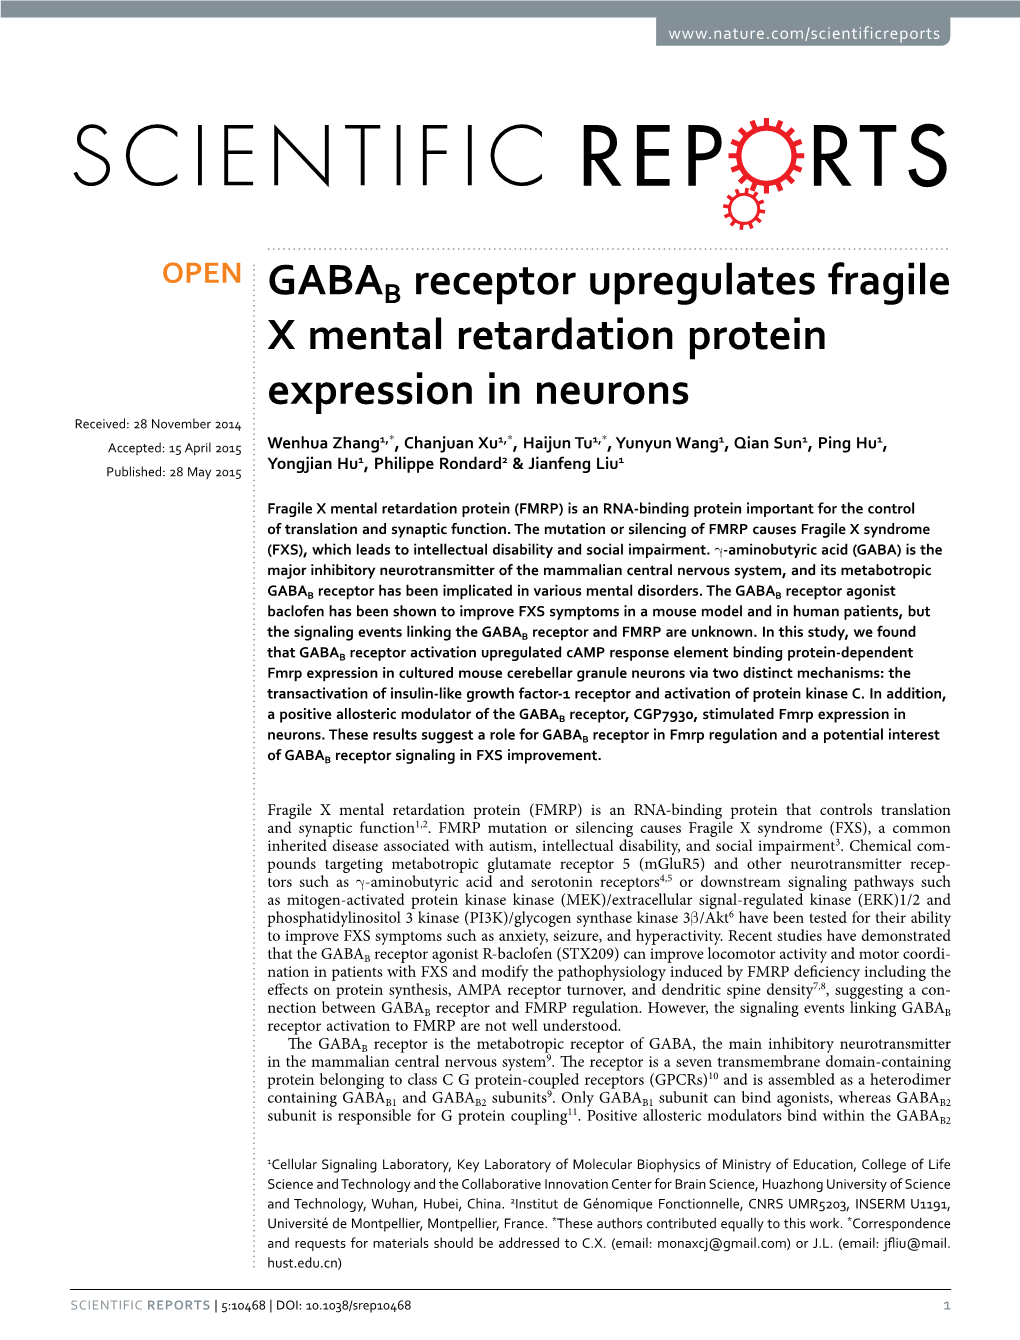 GABAB Receptor Upregulates Fragile X Mental Retardation Protein